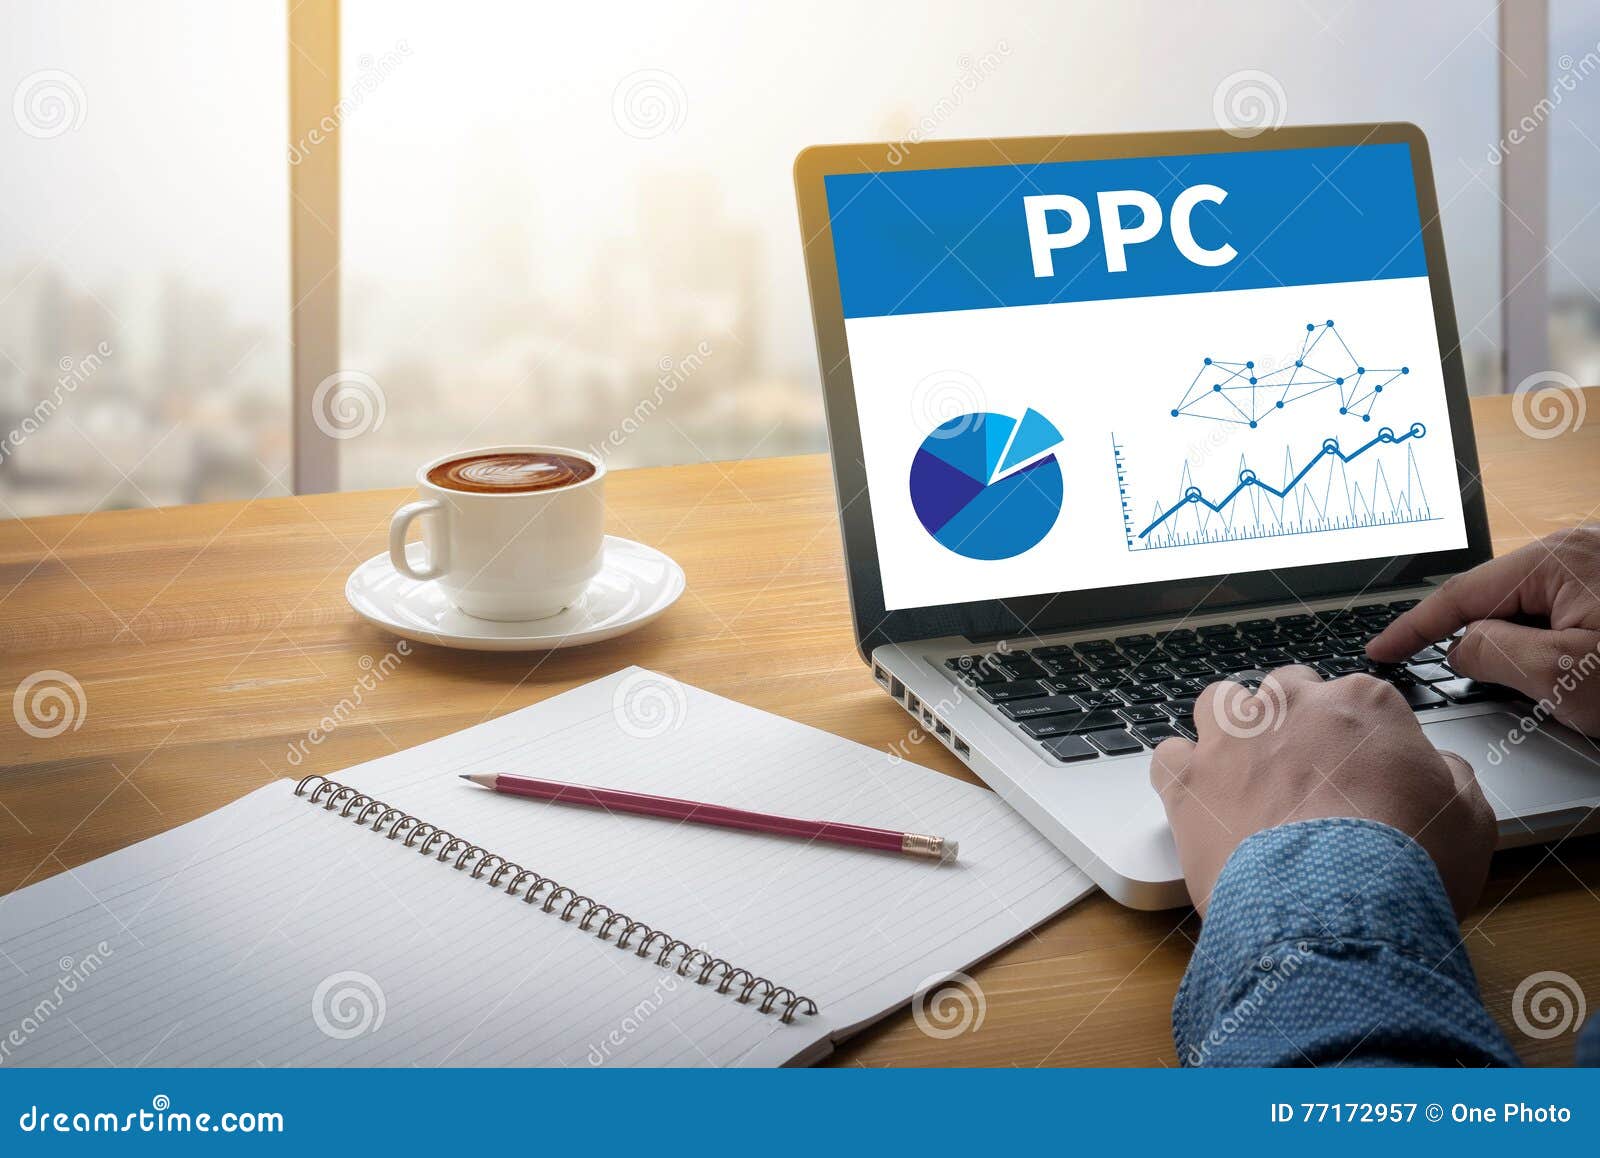 ppc - pay per click concept